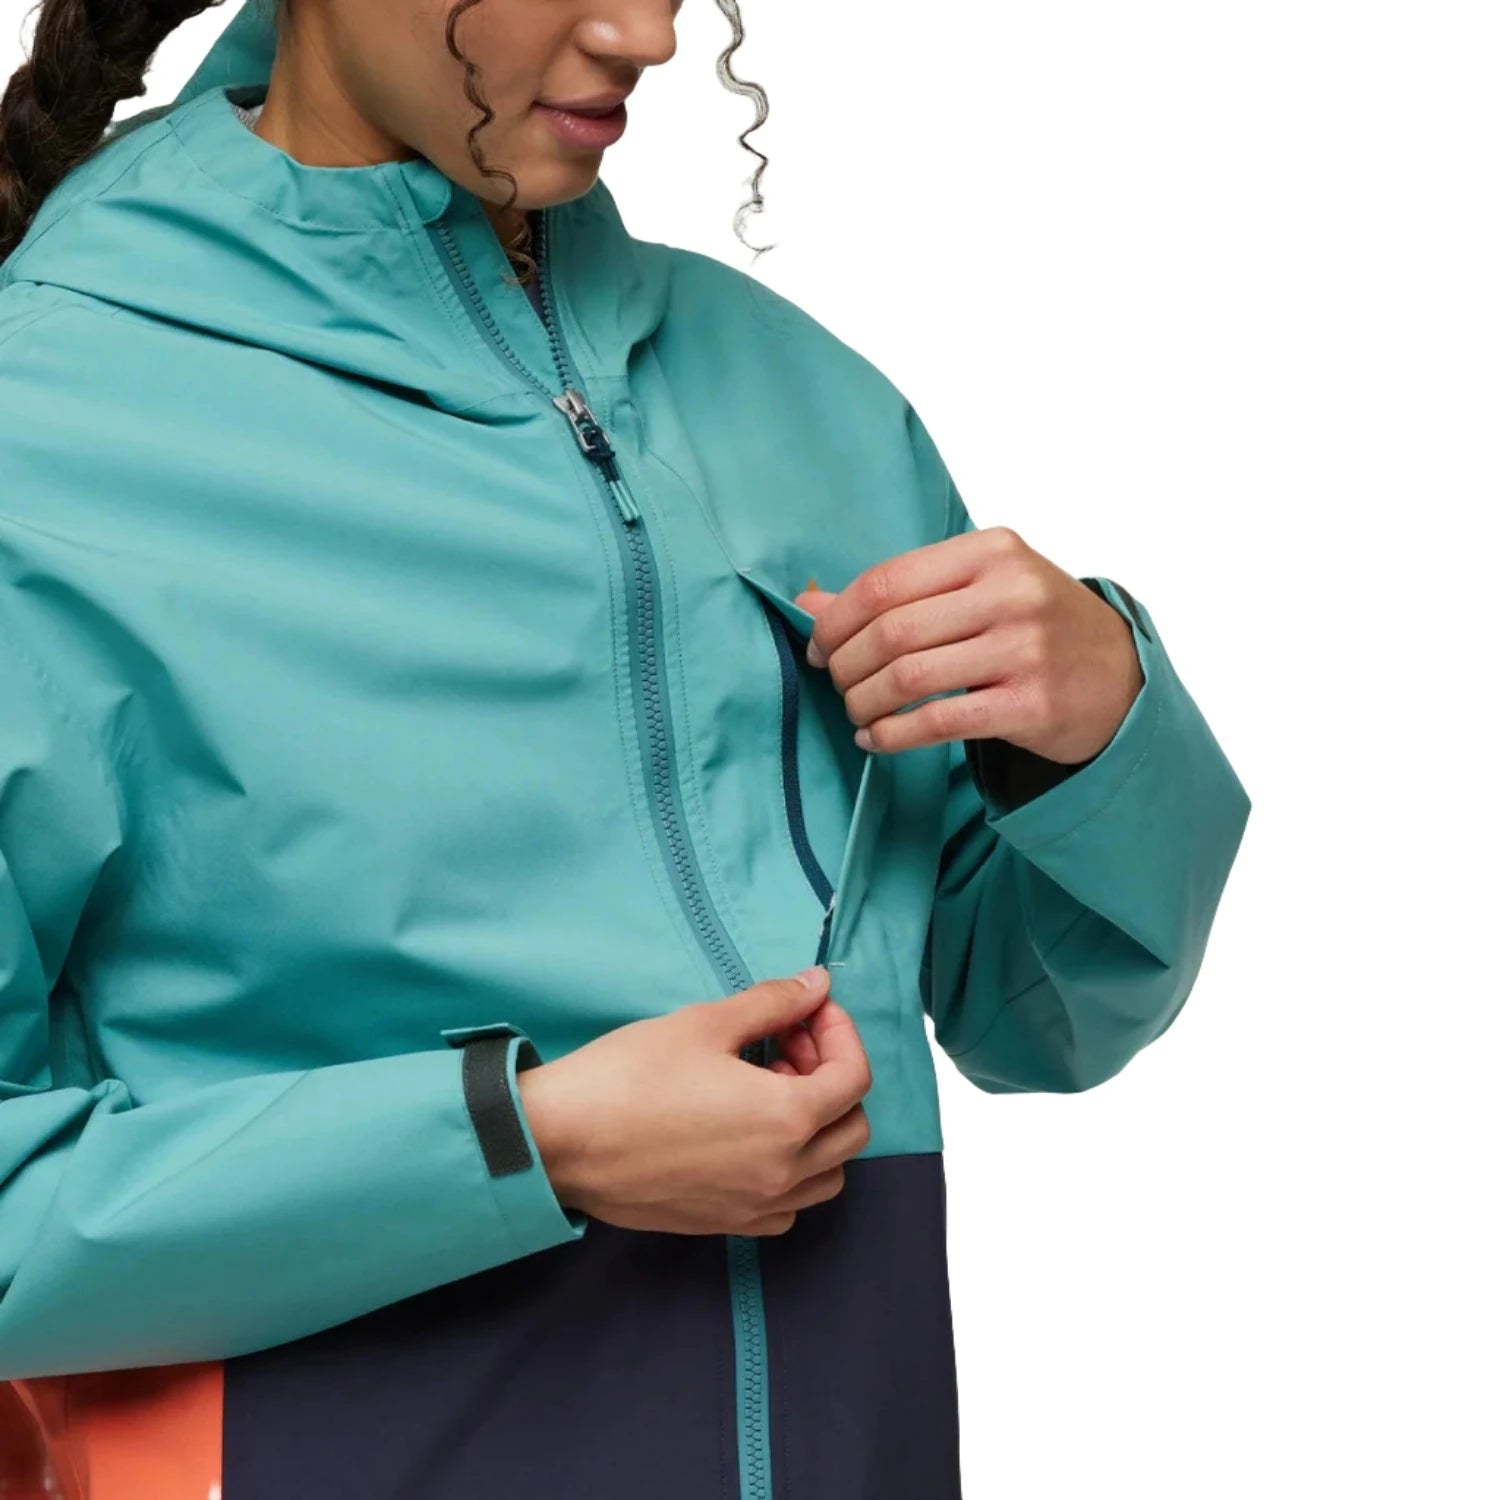 Cotopaxi Women's Cielo Rain Jacket in coastal & graphite chest pocket detail